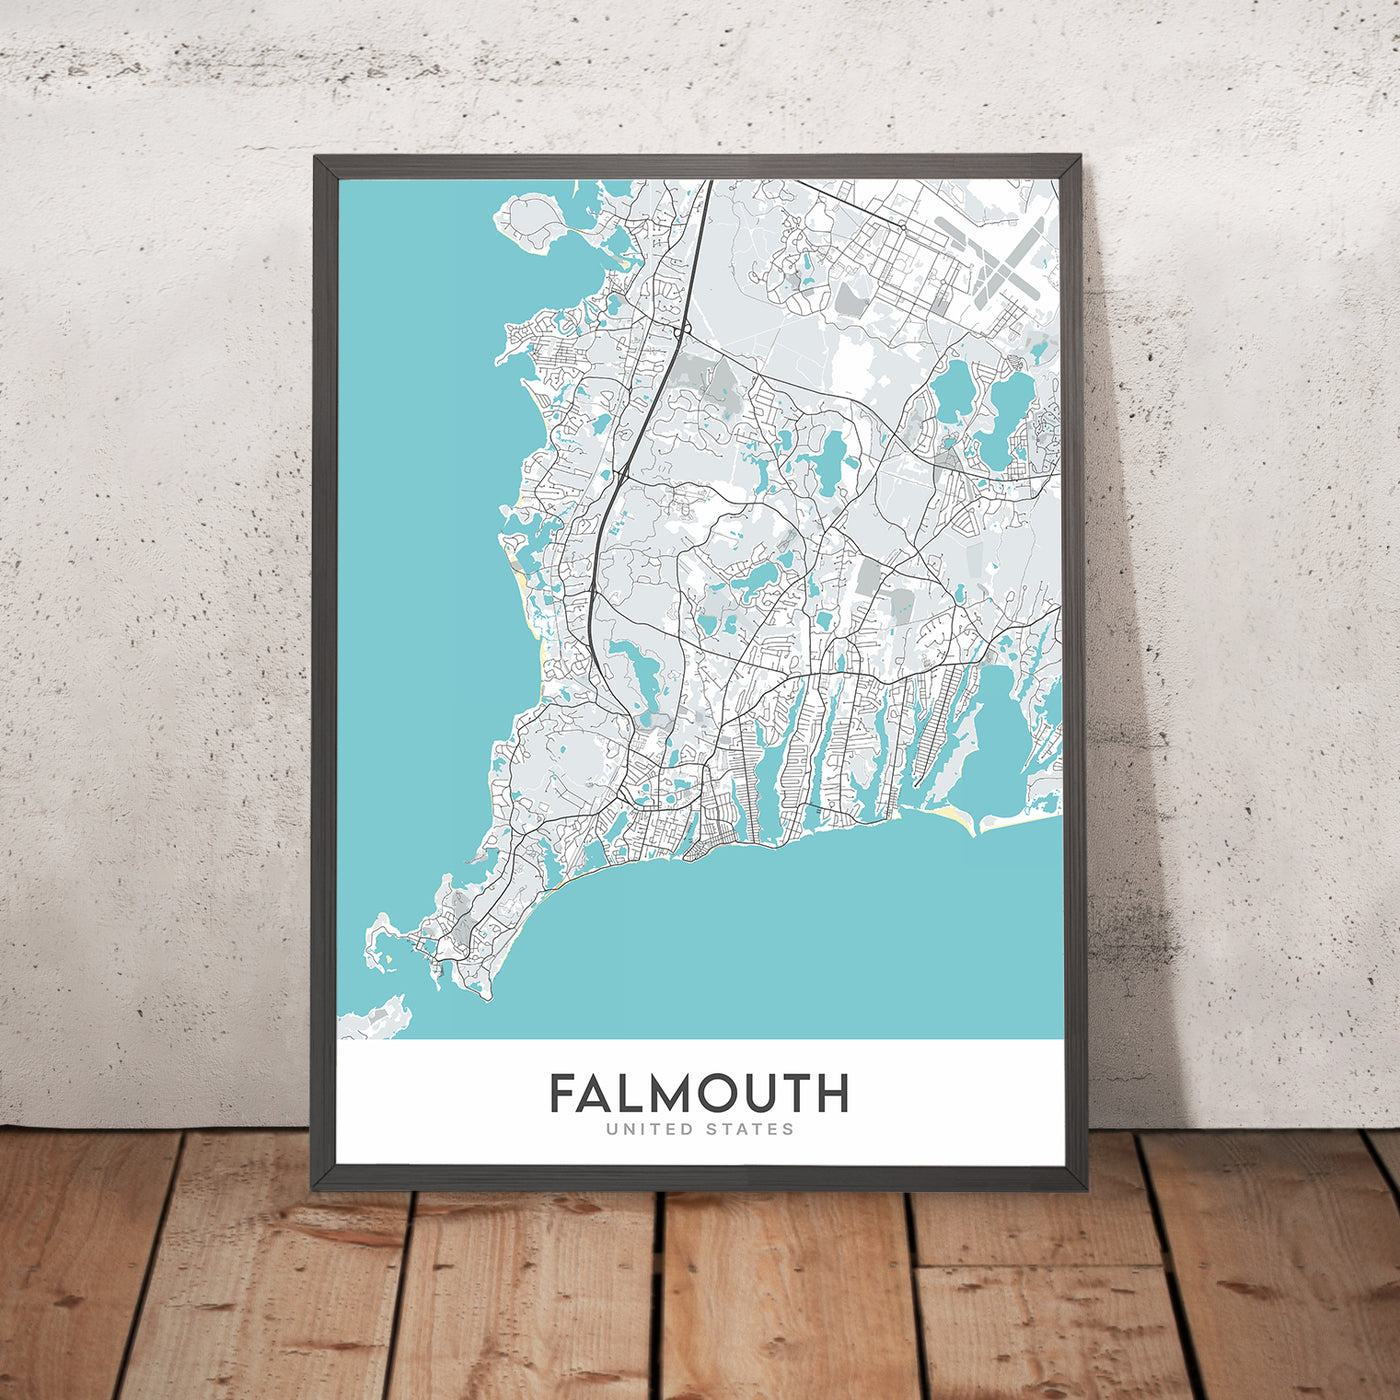 Mapa moderno de la ciudad de Falmouth, MA: puerto de Falmouth, faro de Nobska Point, institución oceanográfica Woods Hole, laboratorio de biología marina, Falmouth Heights